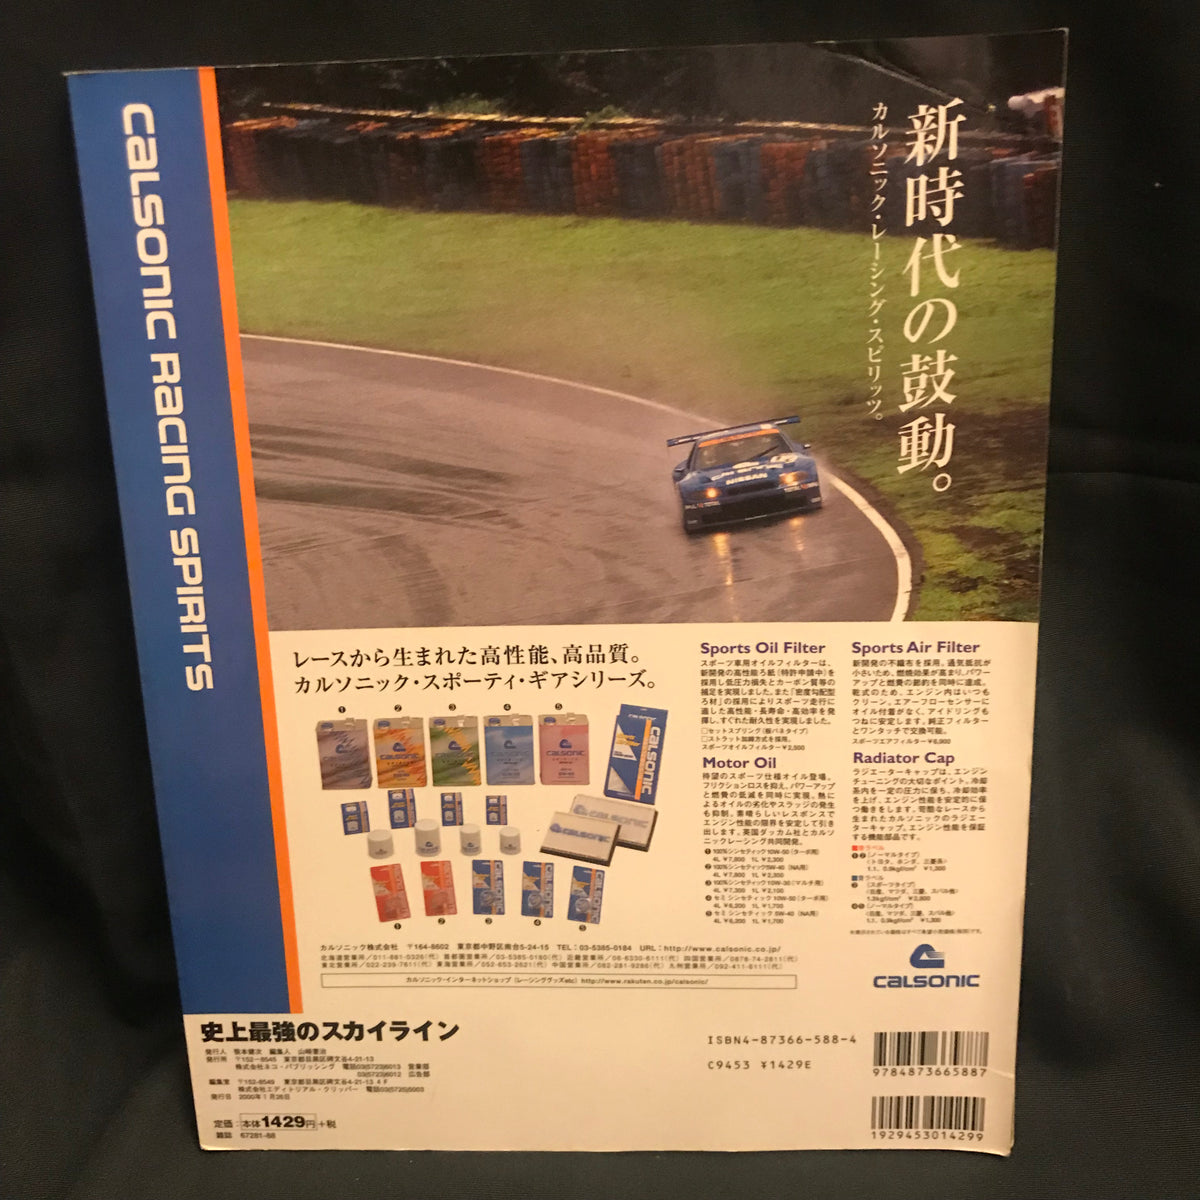 Nissan R30 Skyline Bible book RS turbo, RSX – NIHOBBY 日改通商